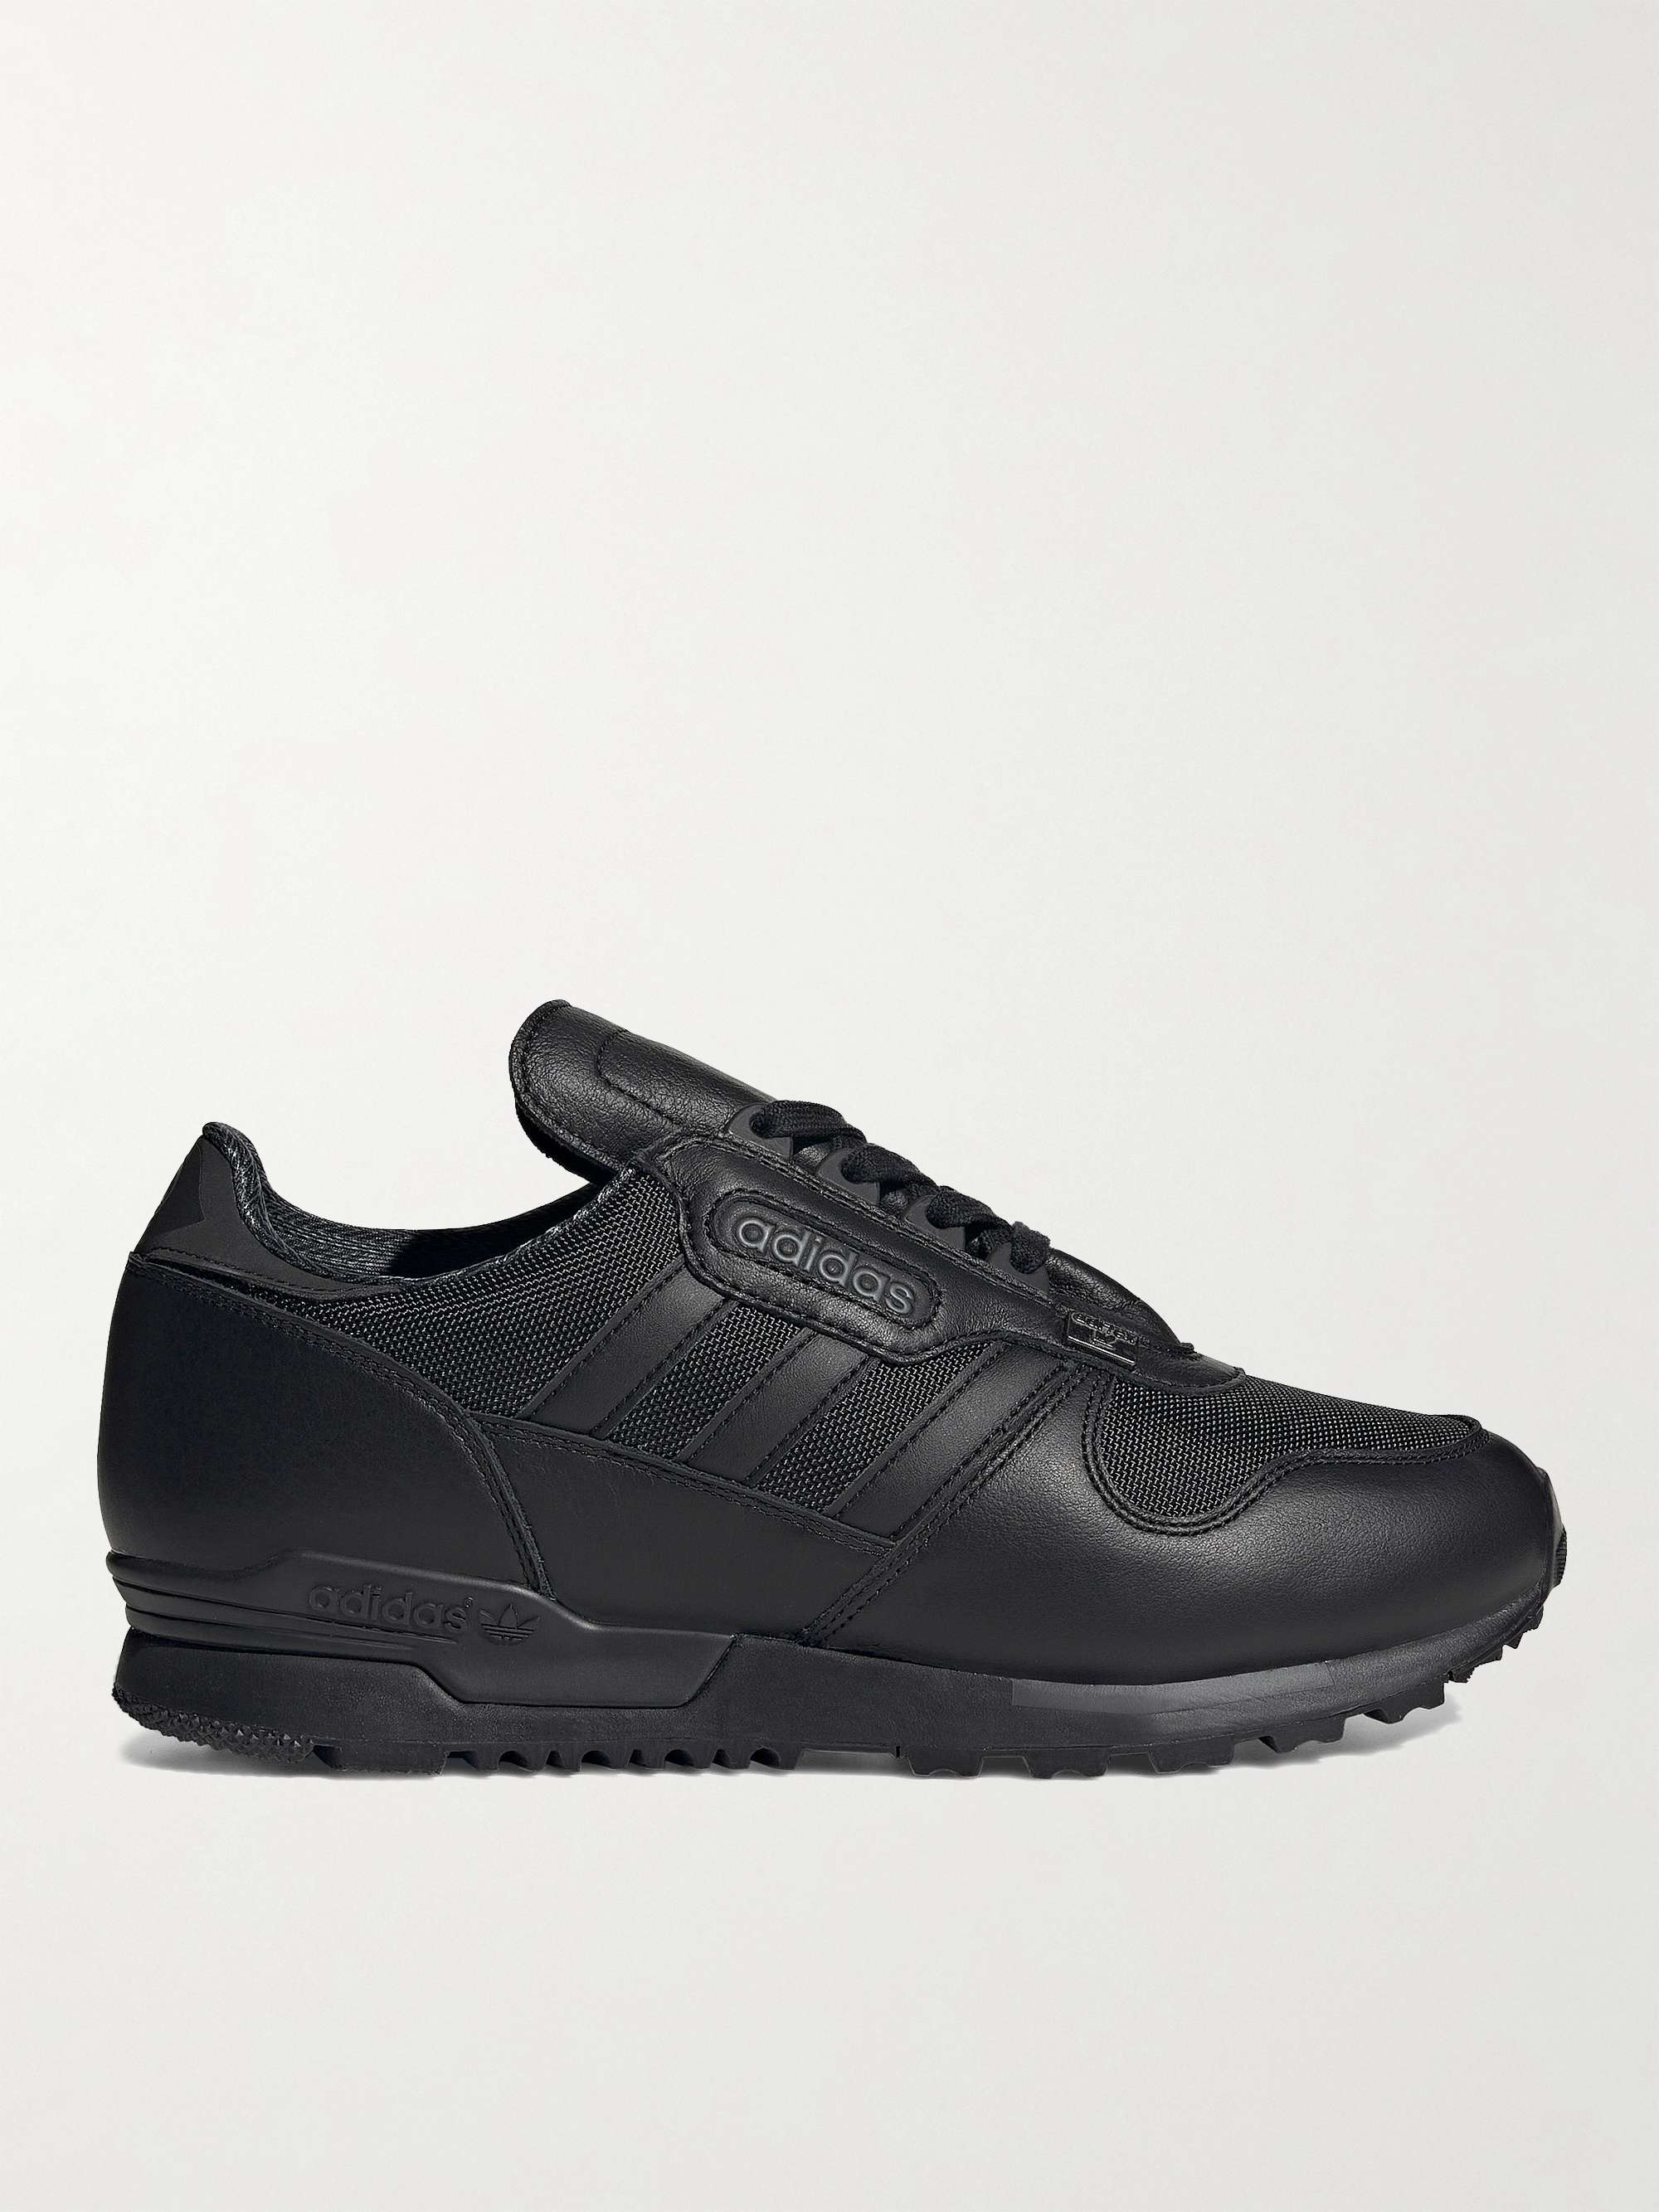 ADIDAS CONSORTIUM Hartness SPZL Leather and Mesh Sneakers for Men | MR ...